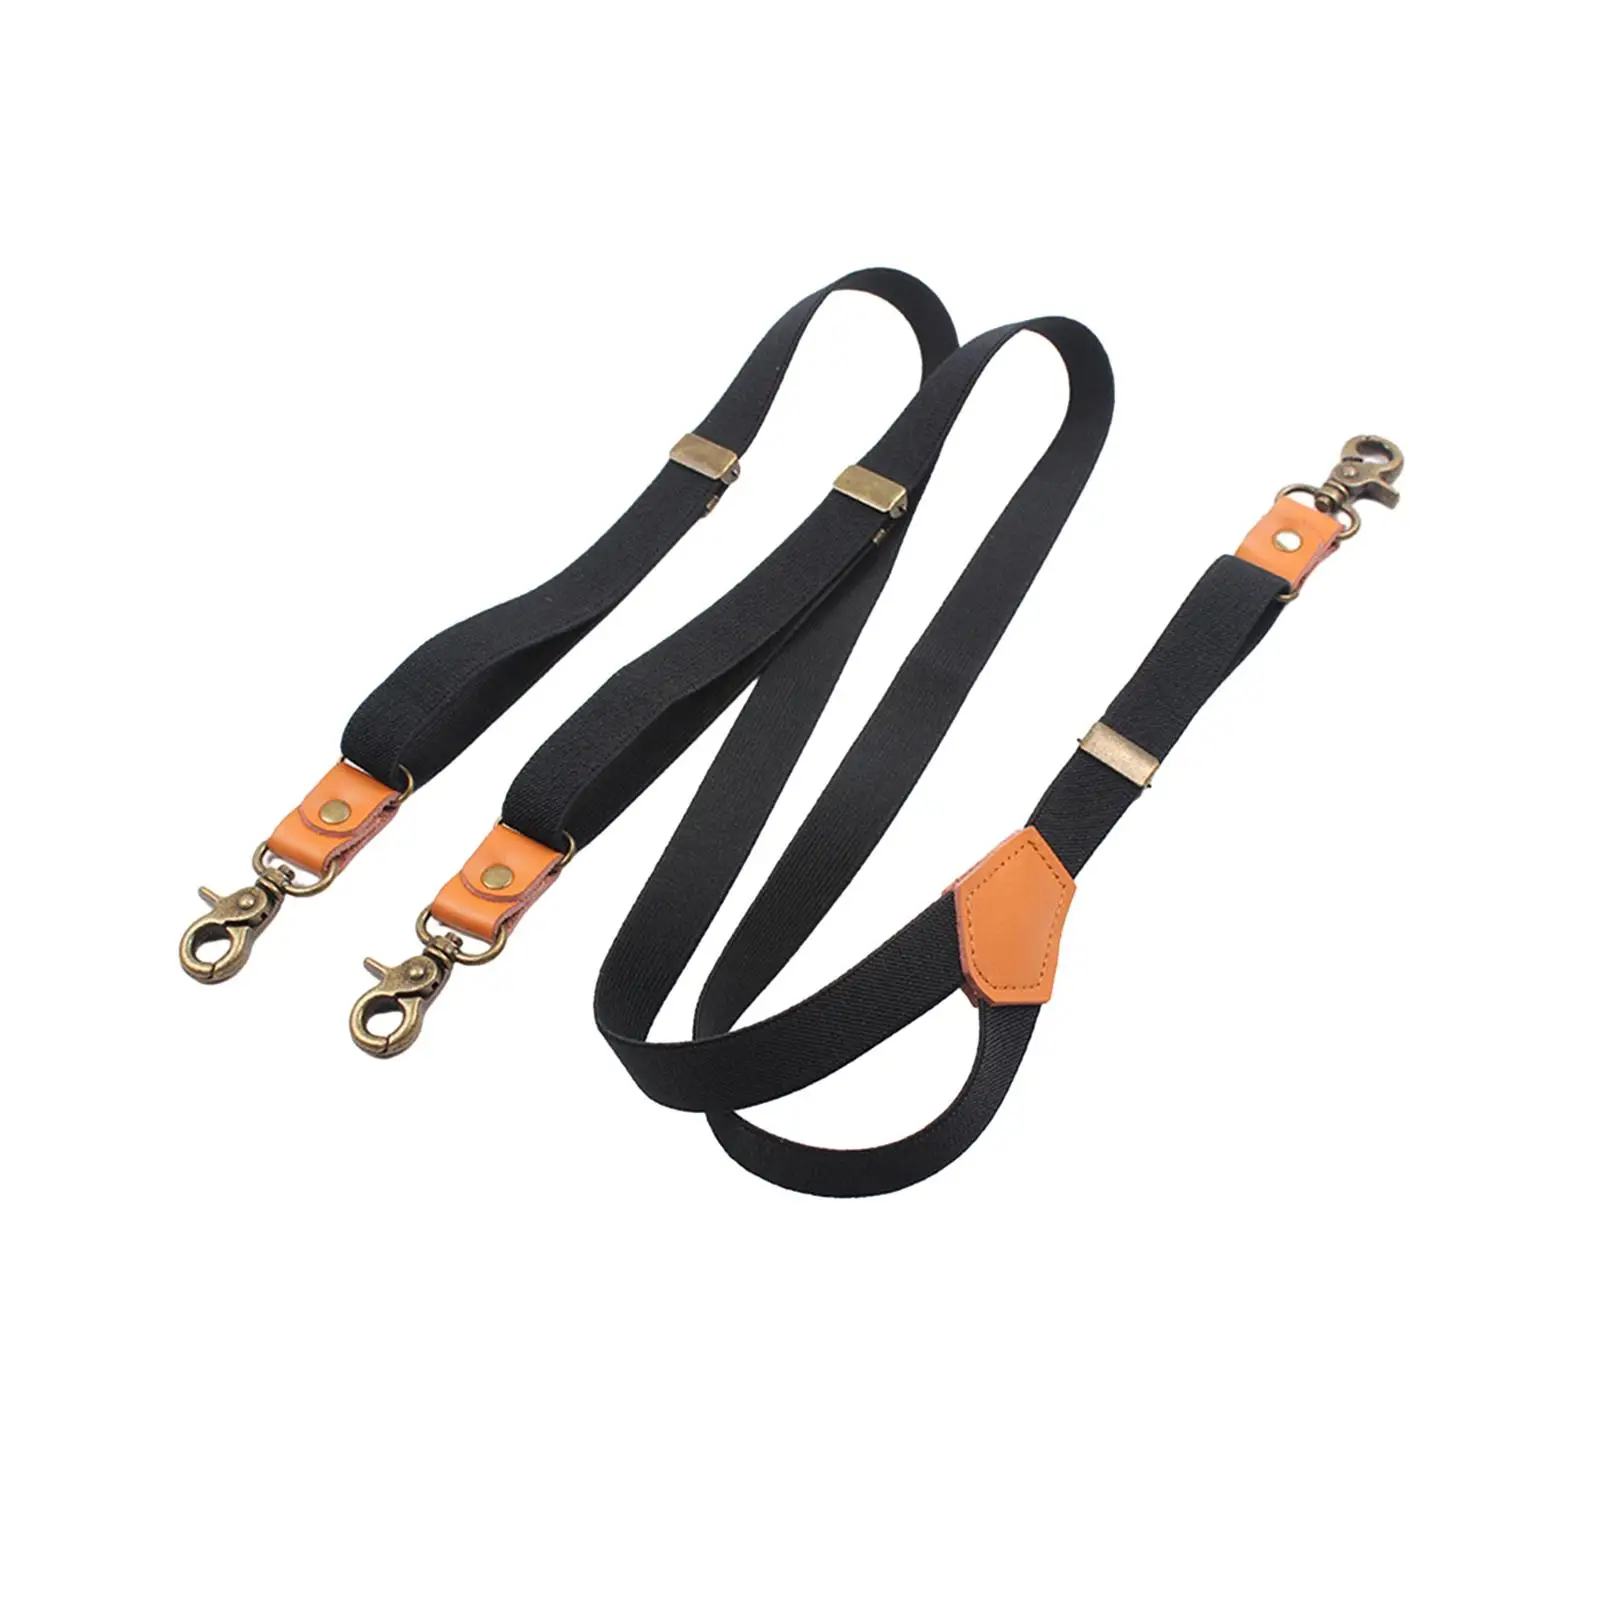 Suspenders for Men Casual Heavy Duty Elastic Adjustable Swivel Hooks Shaped Belt Loops Pants Braces Fashion Adjustable Braces